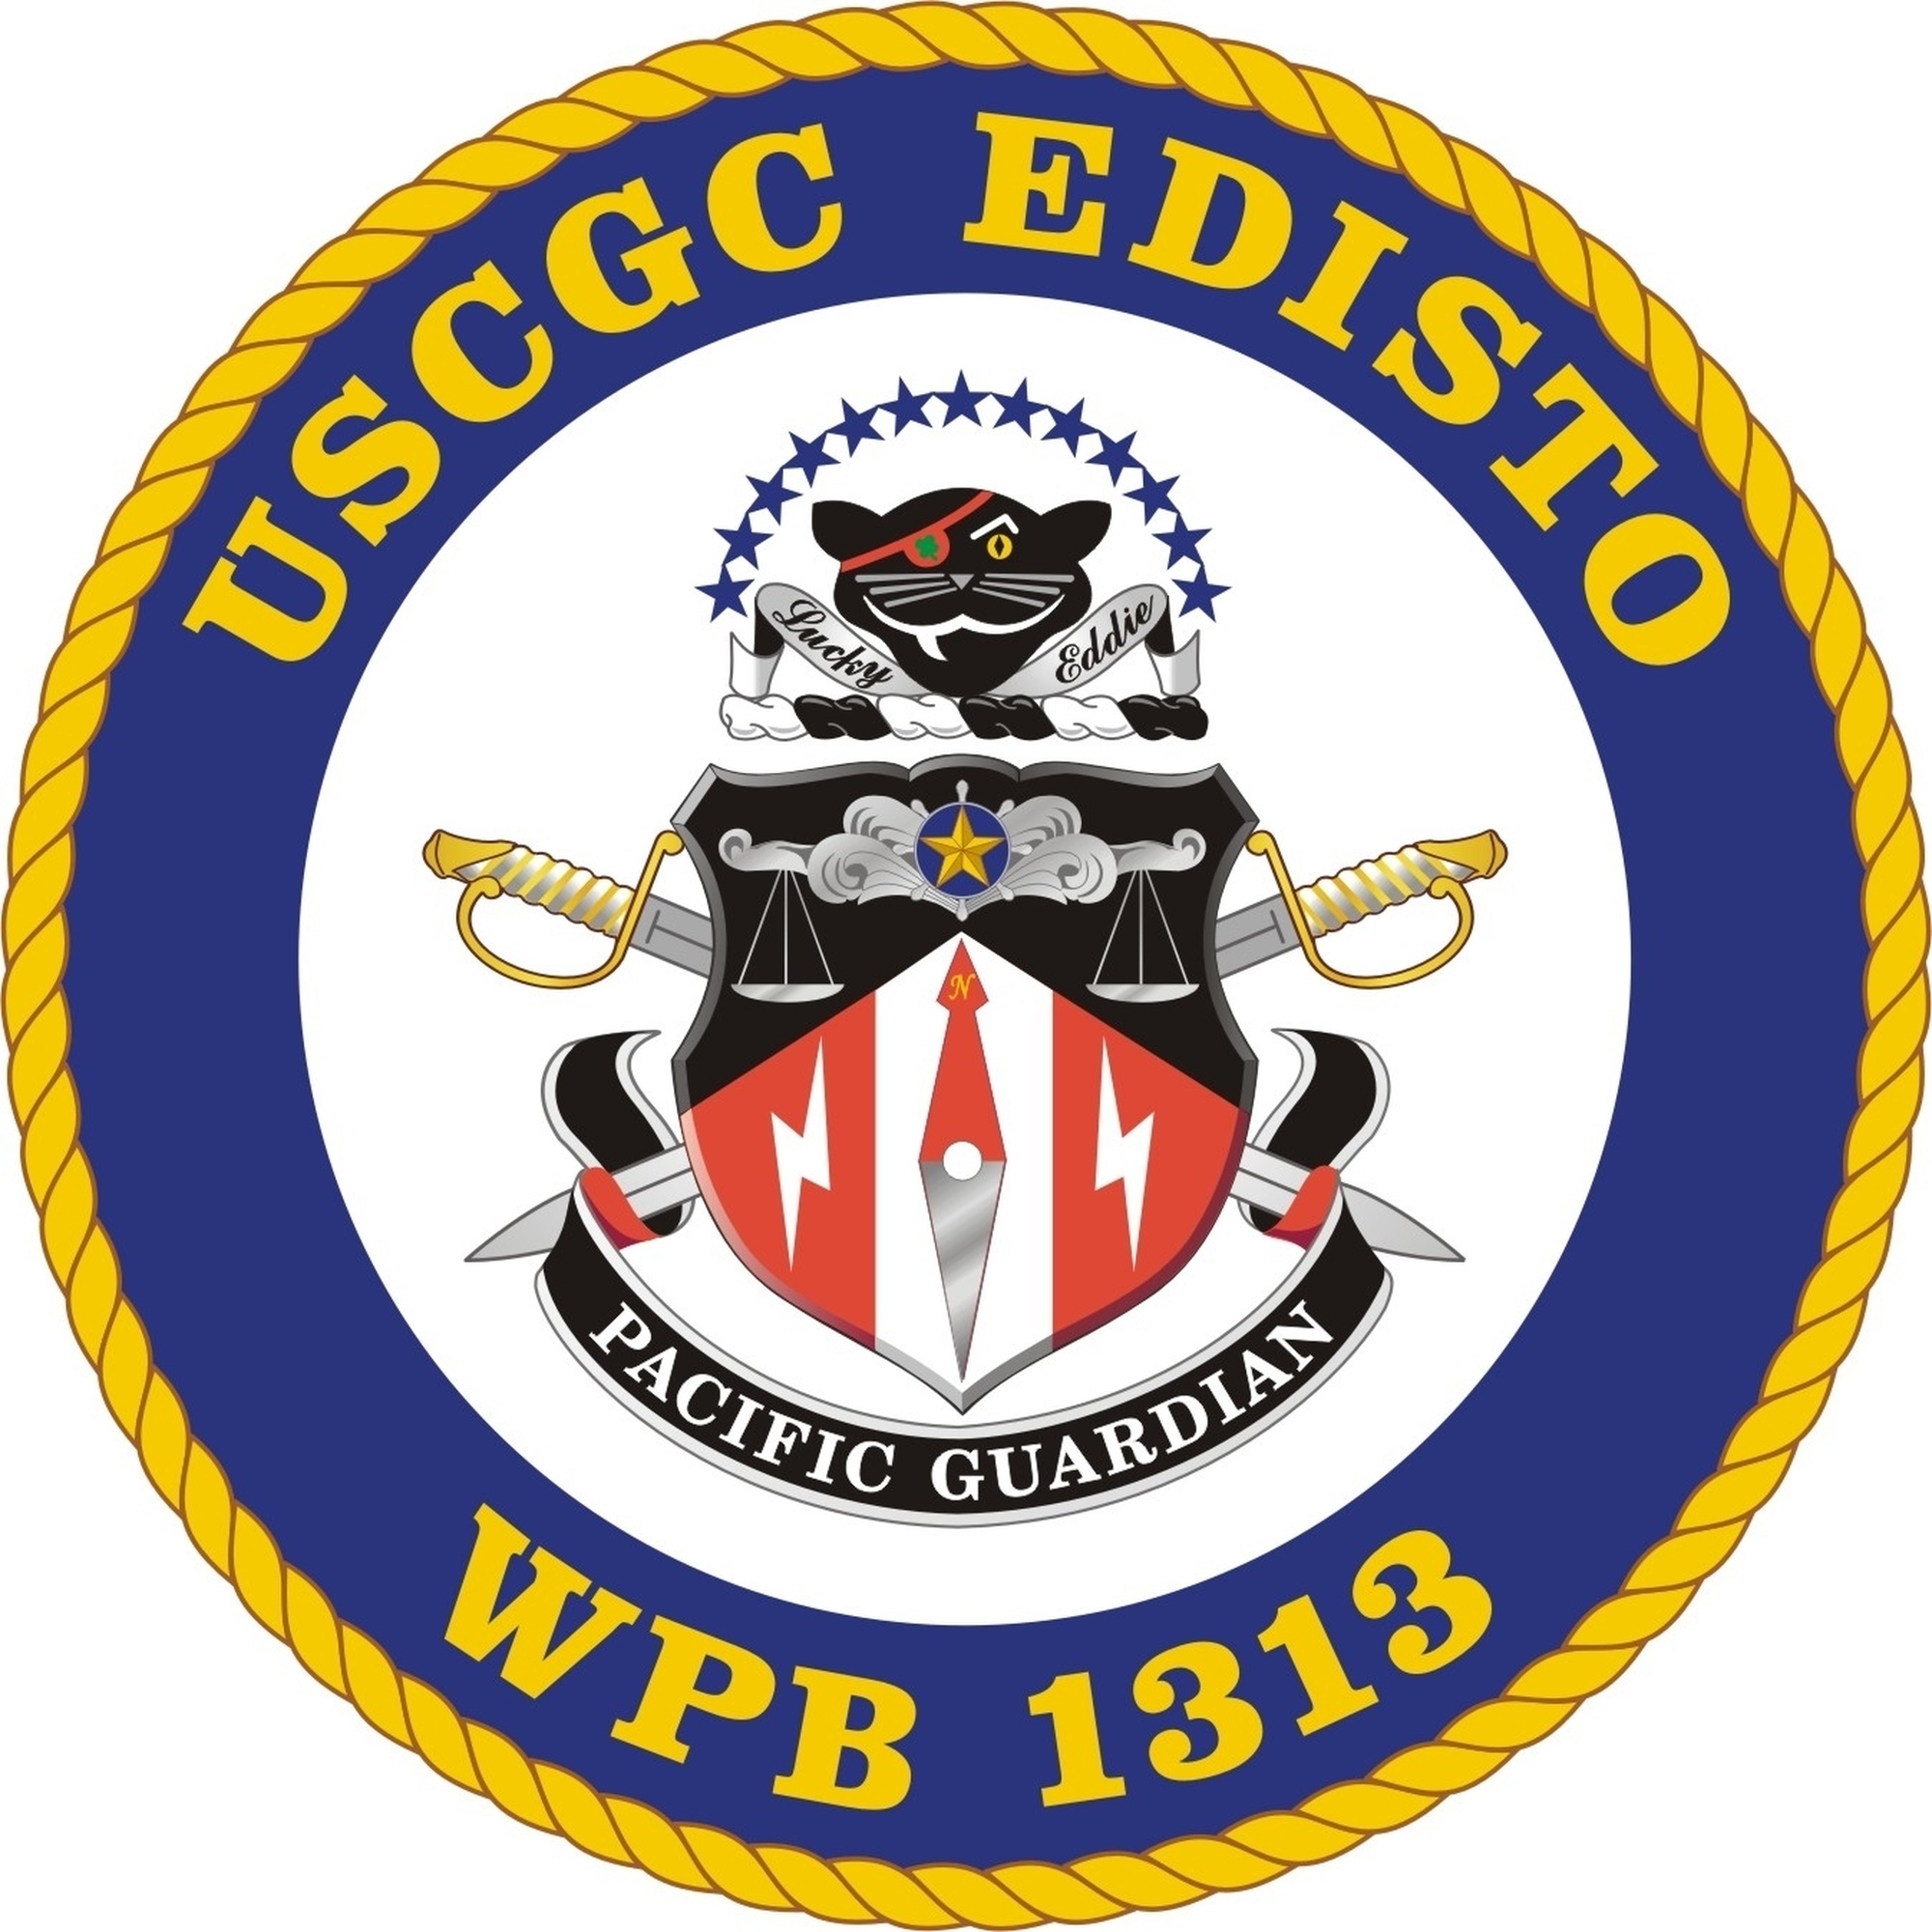 DVIDS - Images - USCGC EDISTO (WPB 1313)